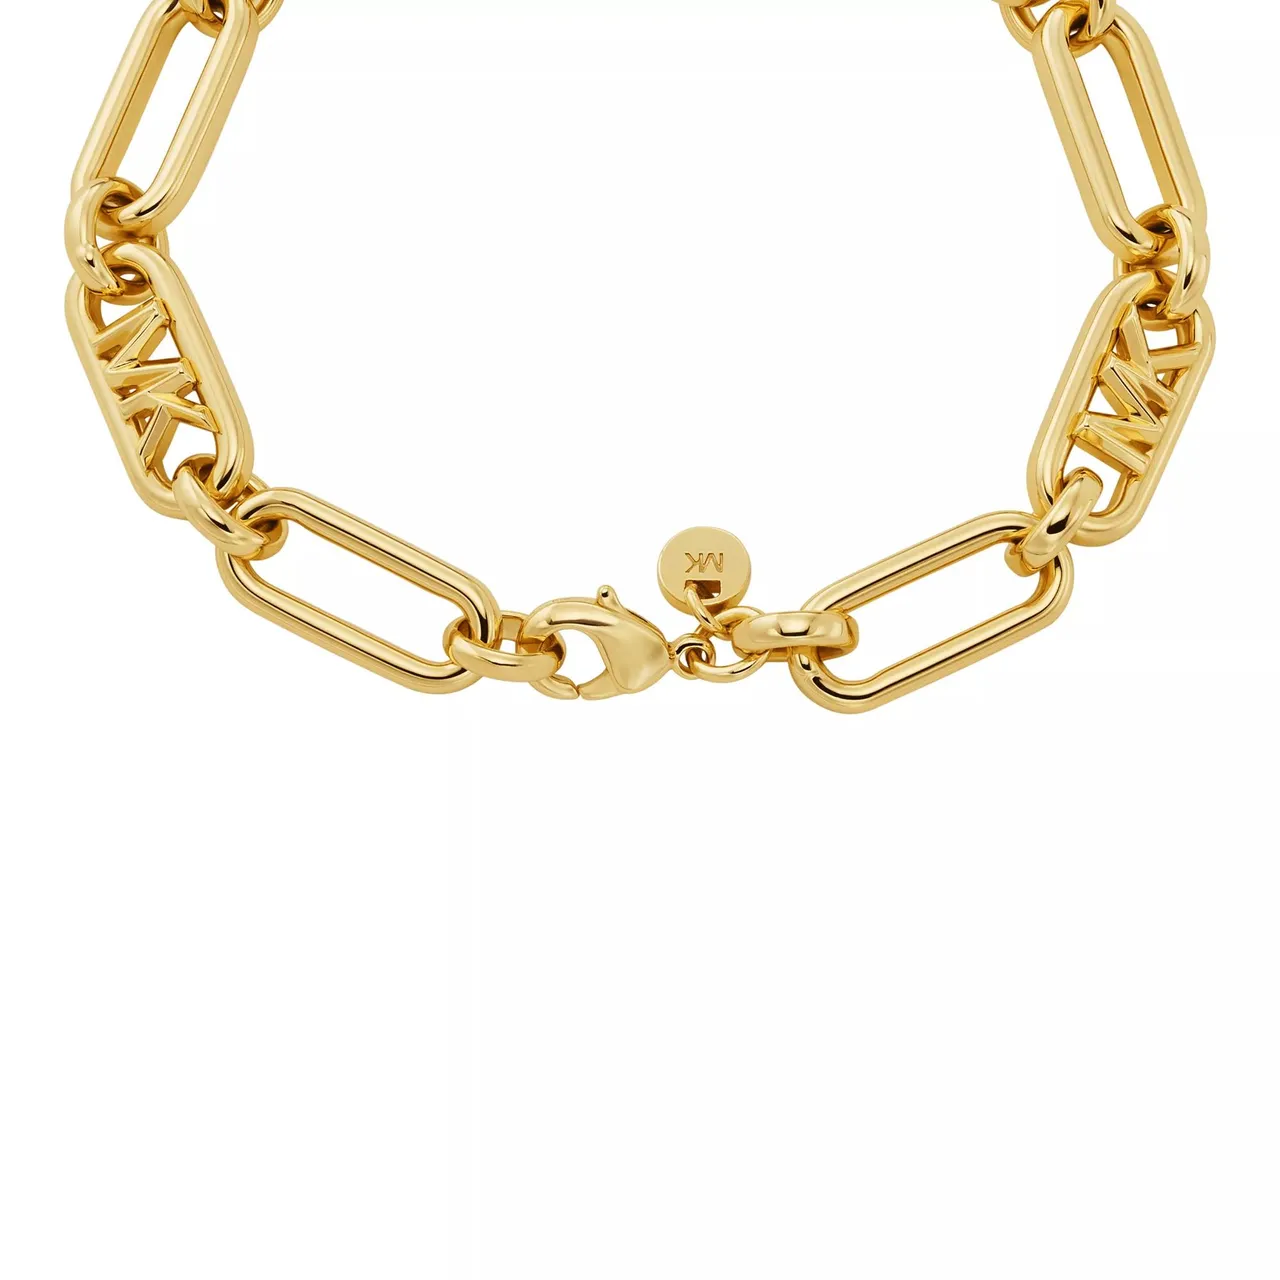 Michael Kors Bracelets - 14K Gold-Plated Empire Link Chain Bracelet - gold - Bracelets for ladies